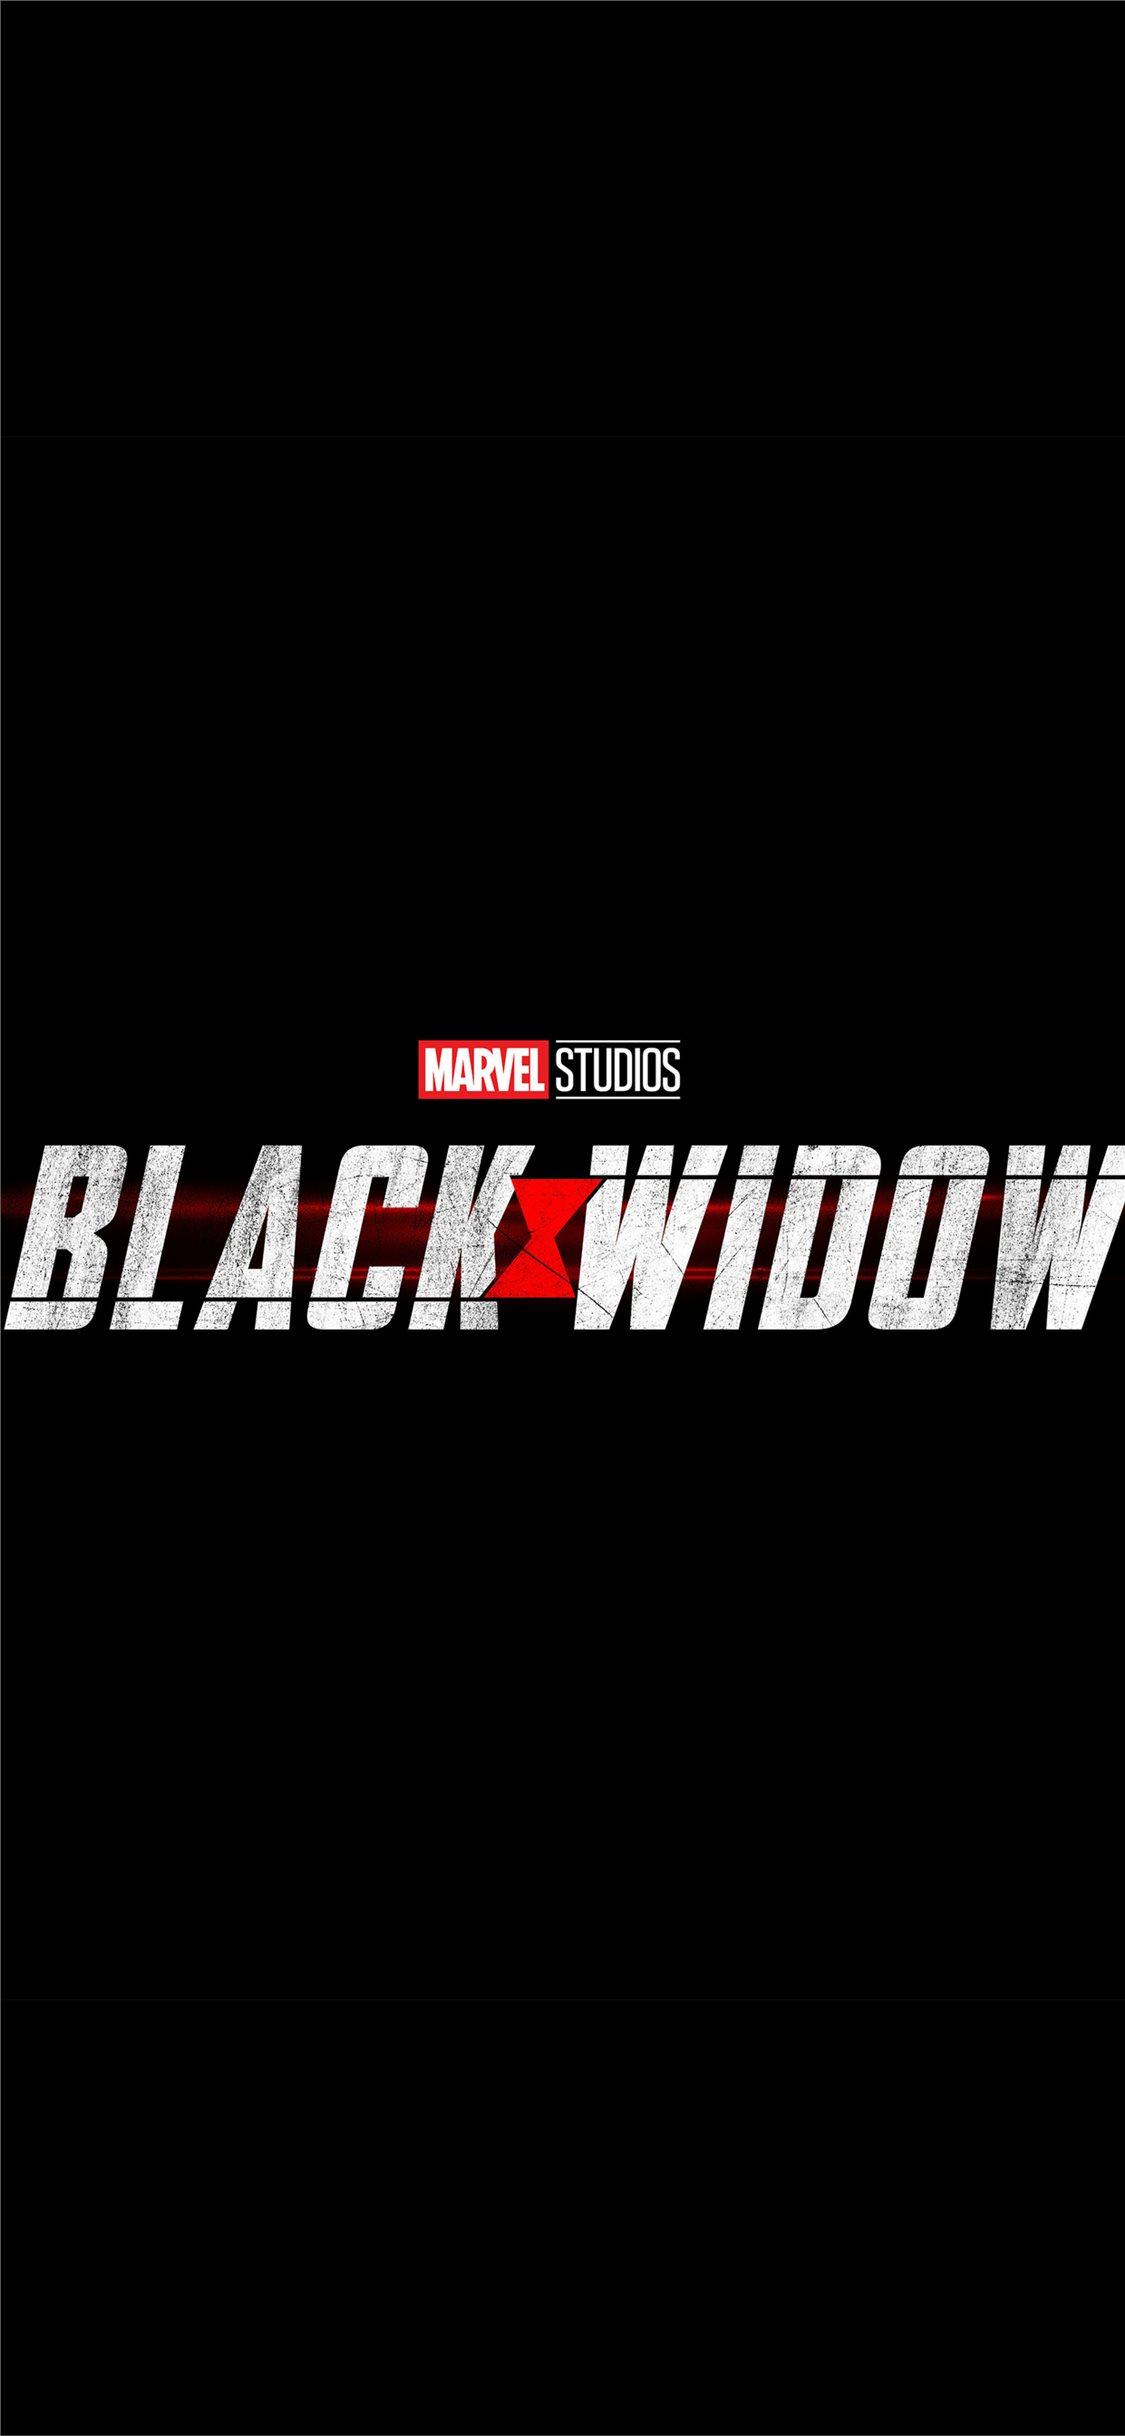 black widow 2020 movie iPhone X Wallpaper Free Download